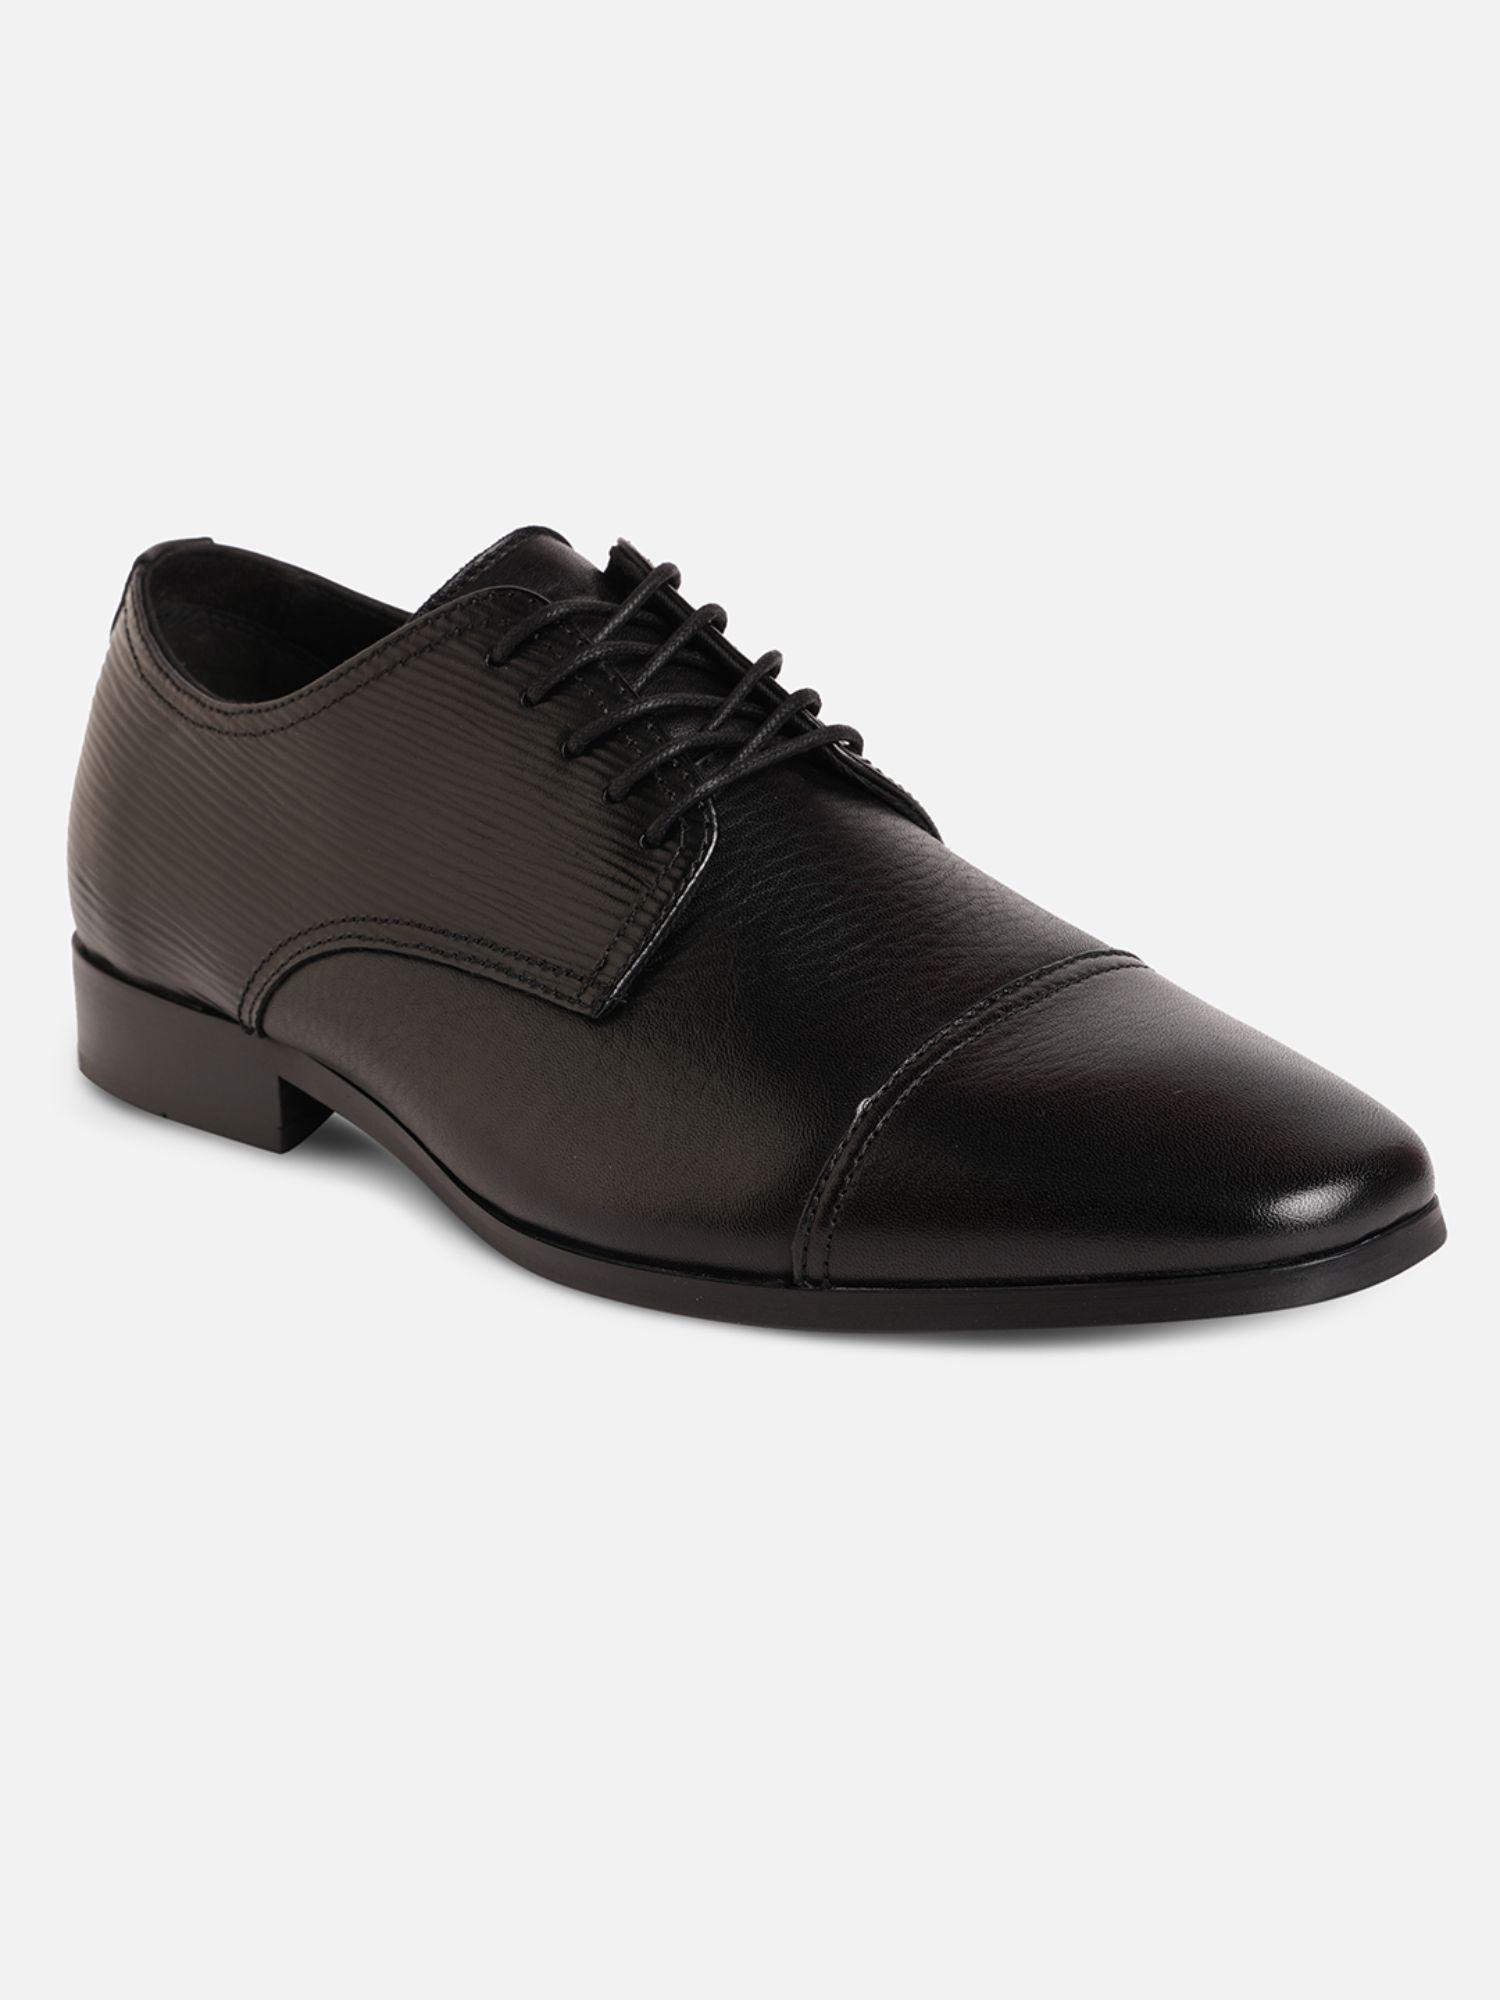 cuciroflex men's black formal shoes